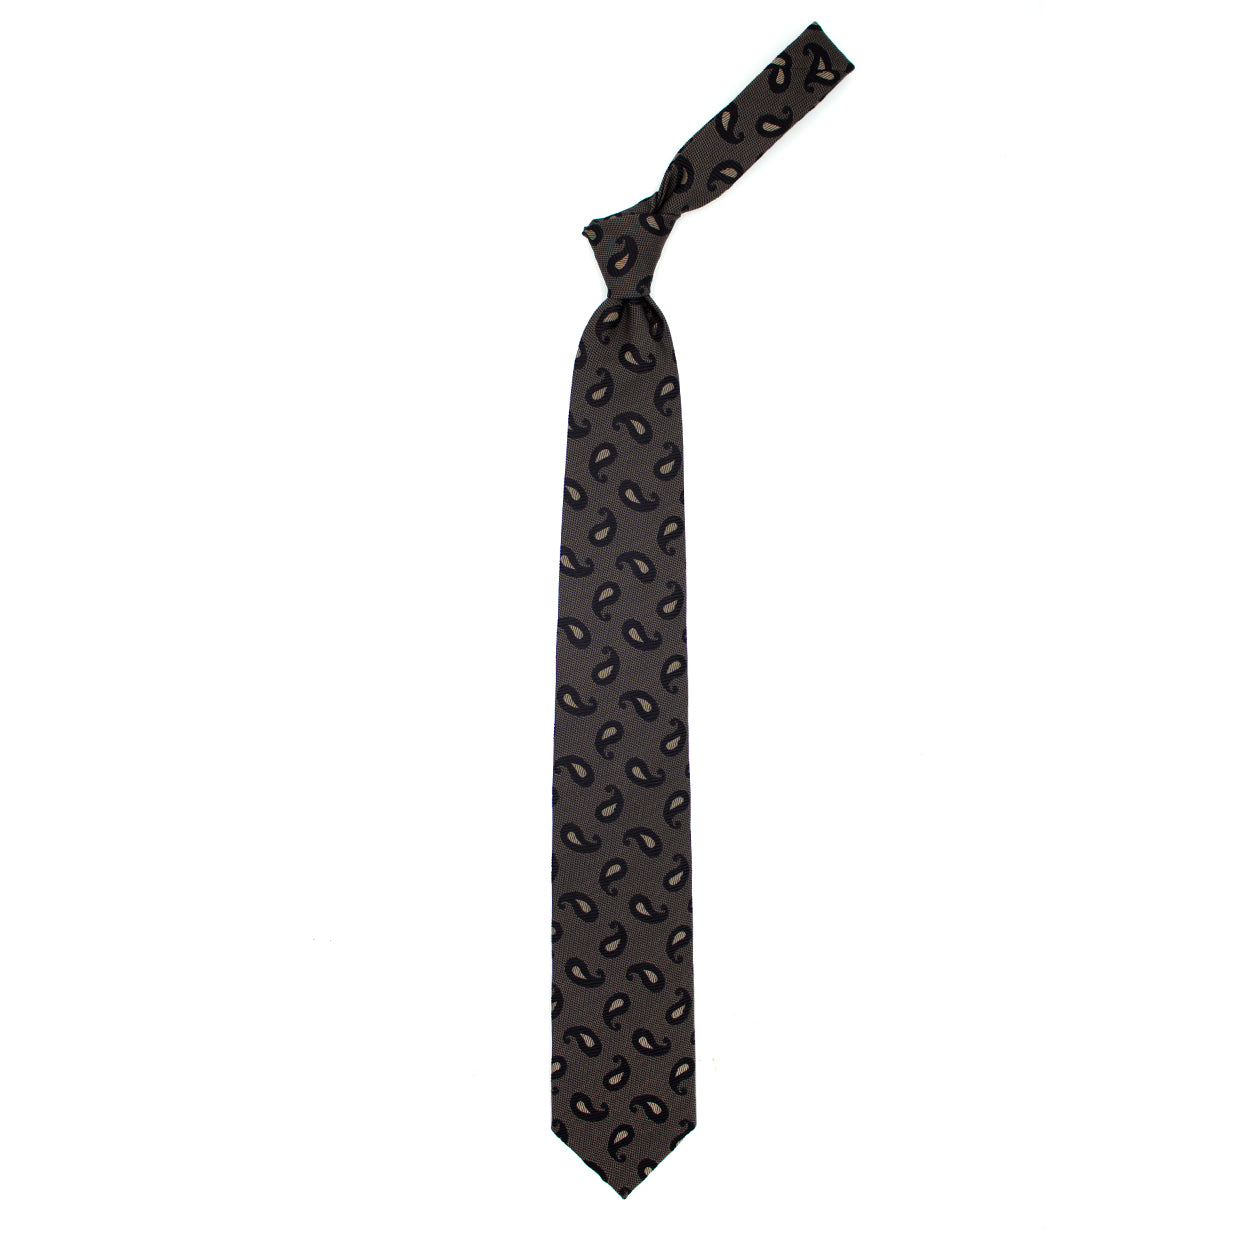 Brown tie with black and beige paisleys